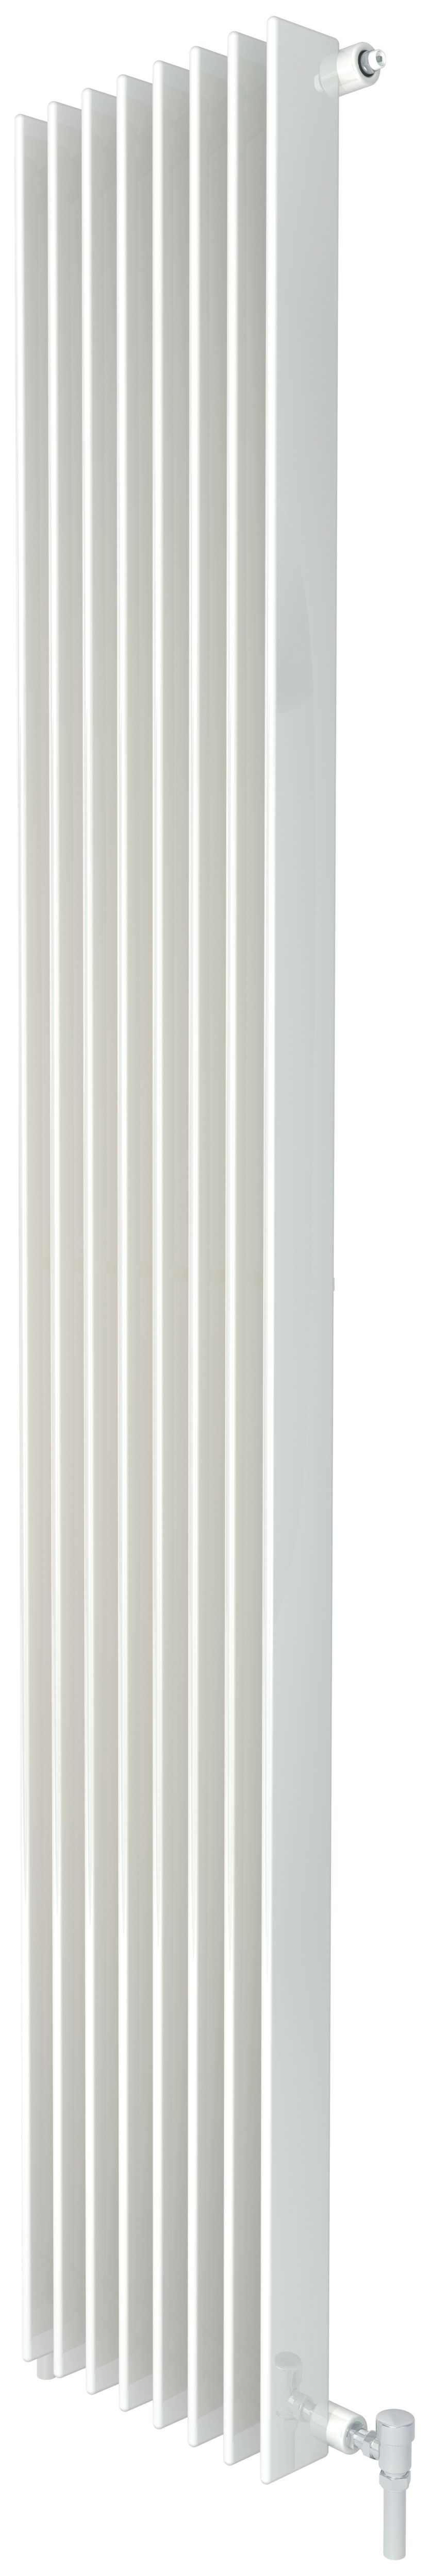 Image of Henrad Verona Slim Single Panel Vertical Designer Radiator - White 1800 x 520 mm